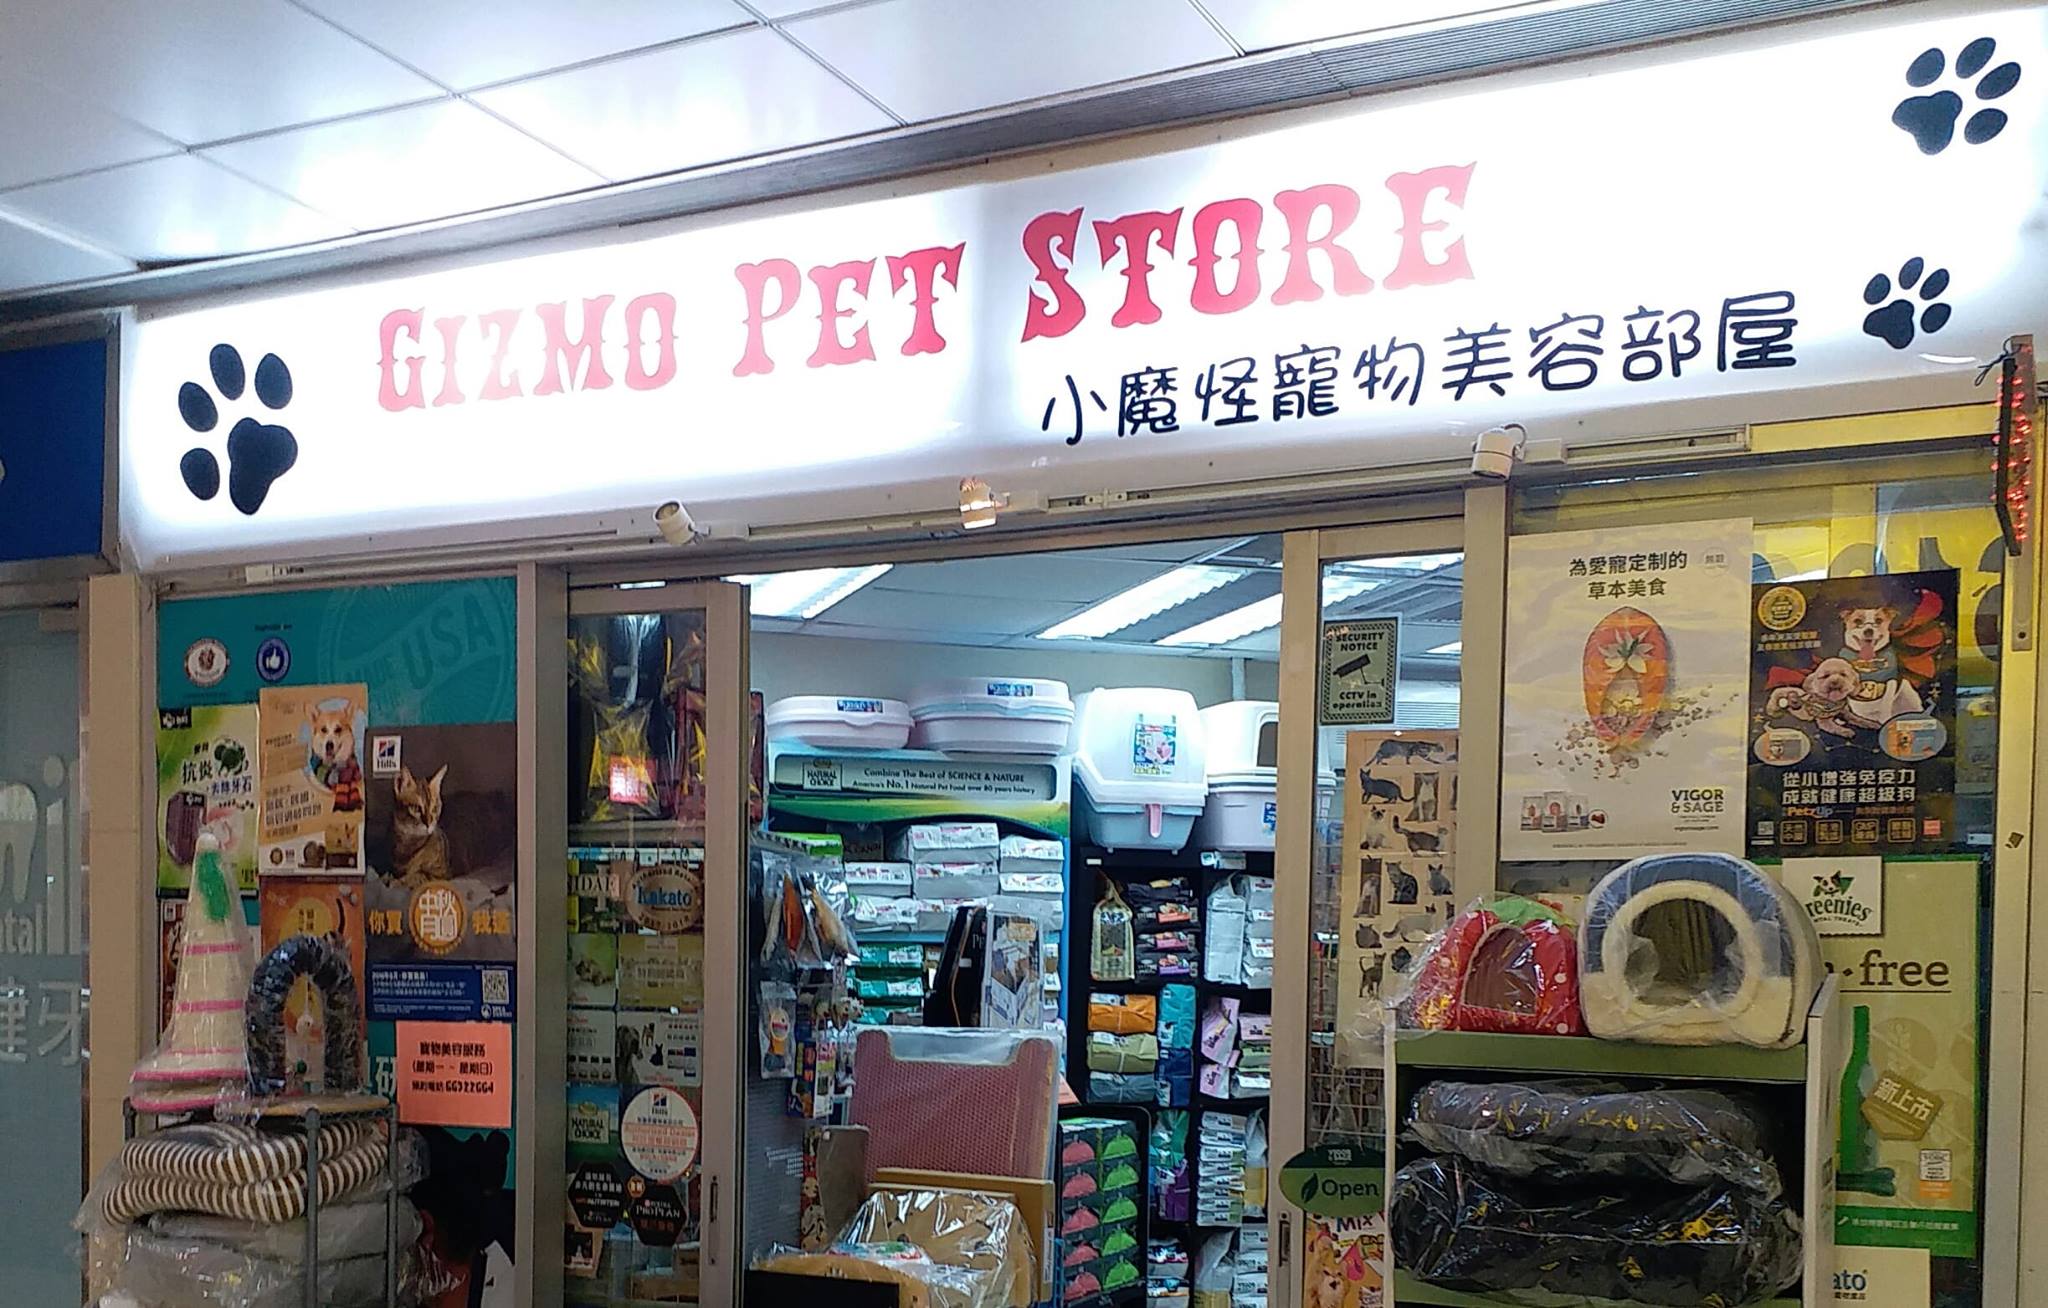 Gizmo Pet Store 小魔怪寵物美容